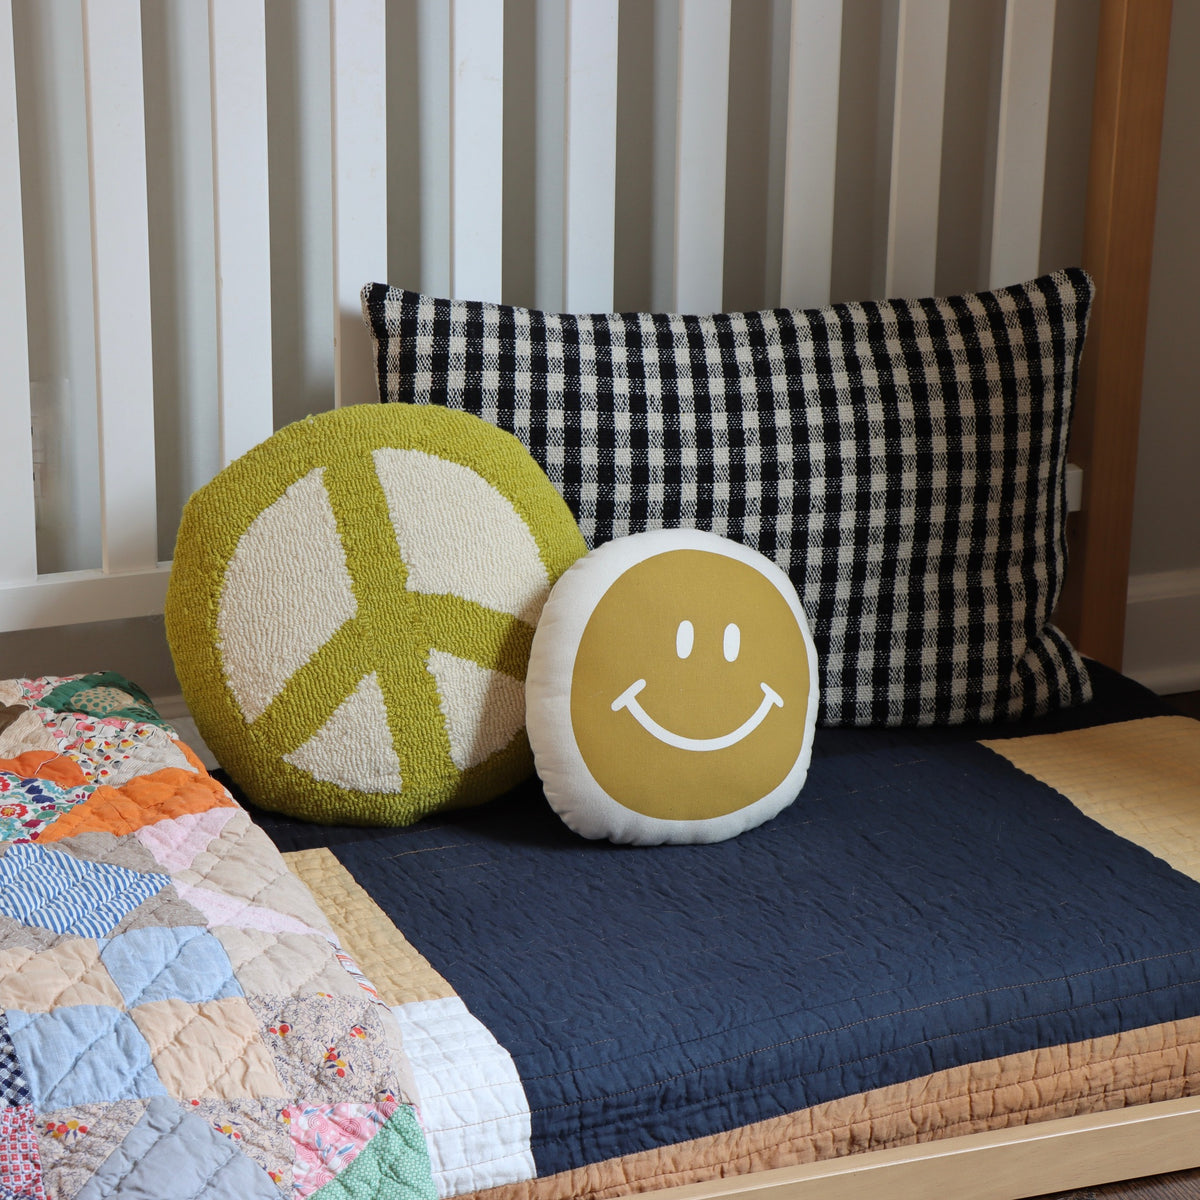 Smiley Face Pillow - Holistic Habitat 